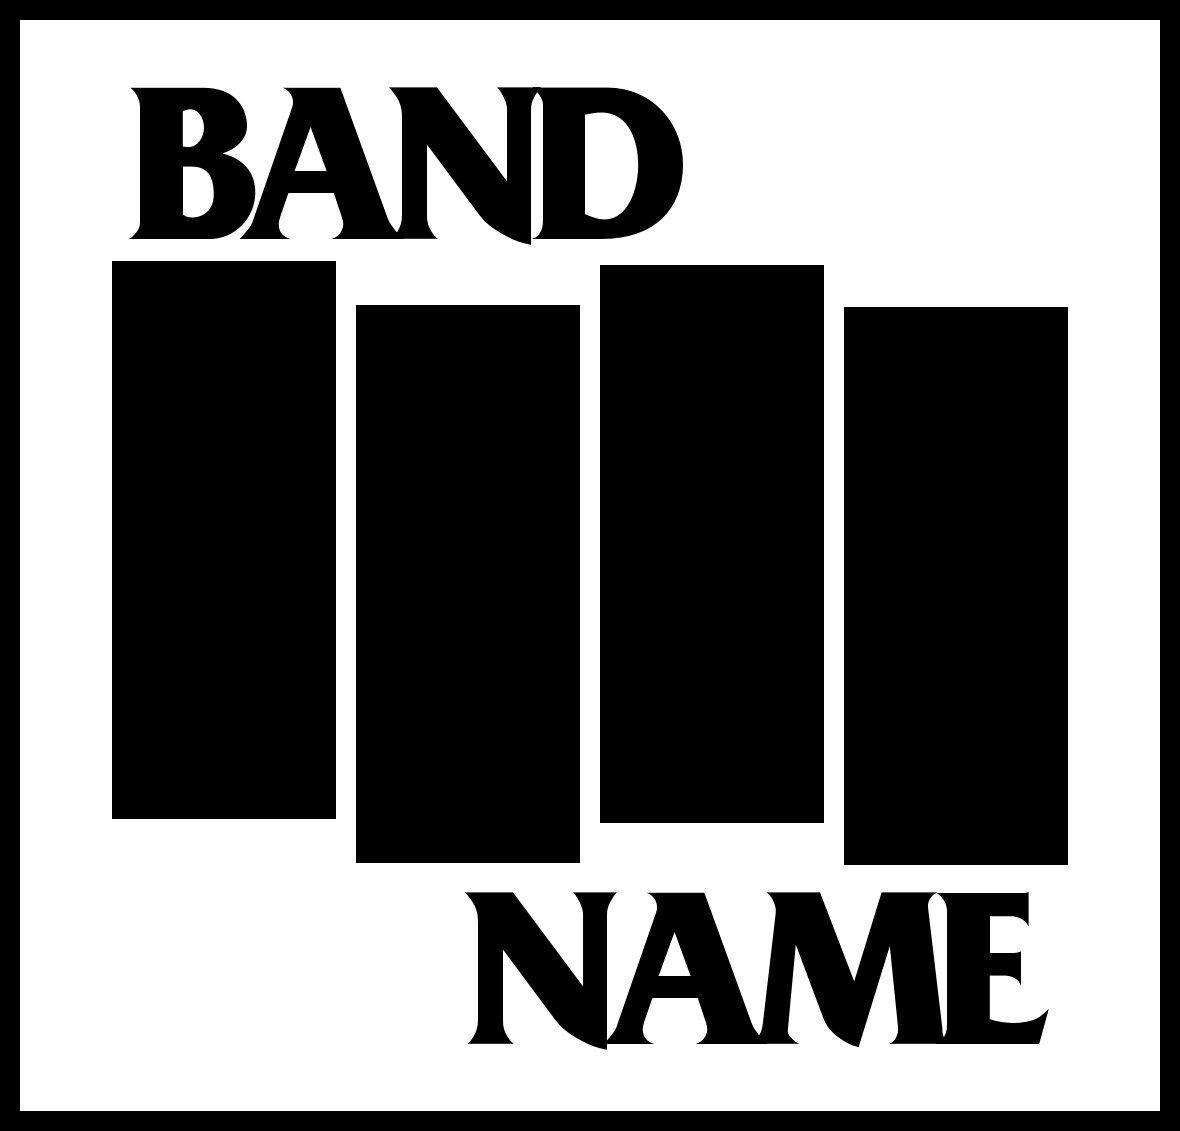 Henry Rollins Logo - New Comedy Sticker Band Name Black Flag Parody Punk